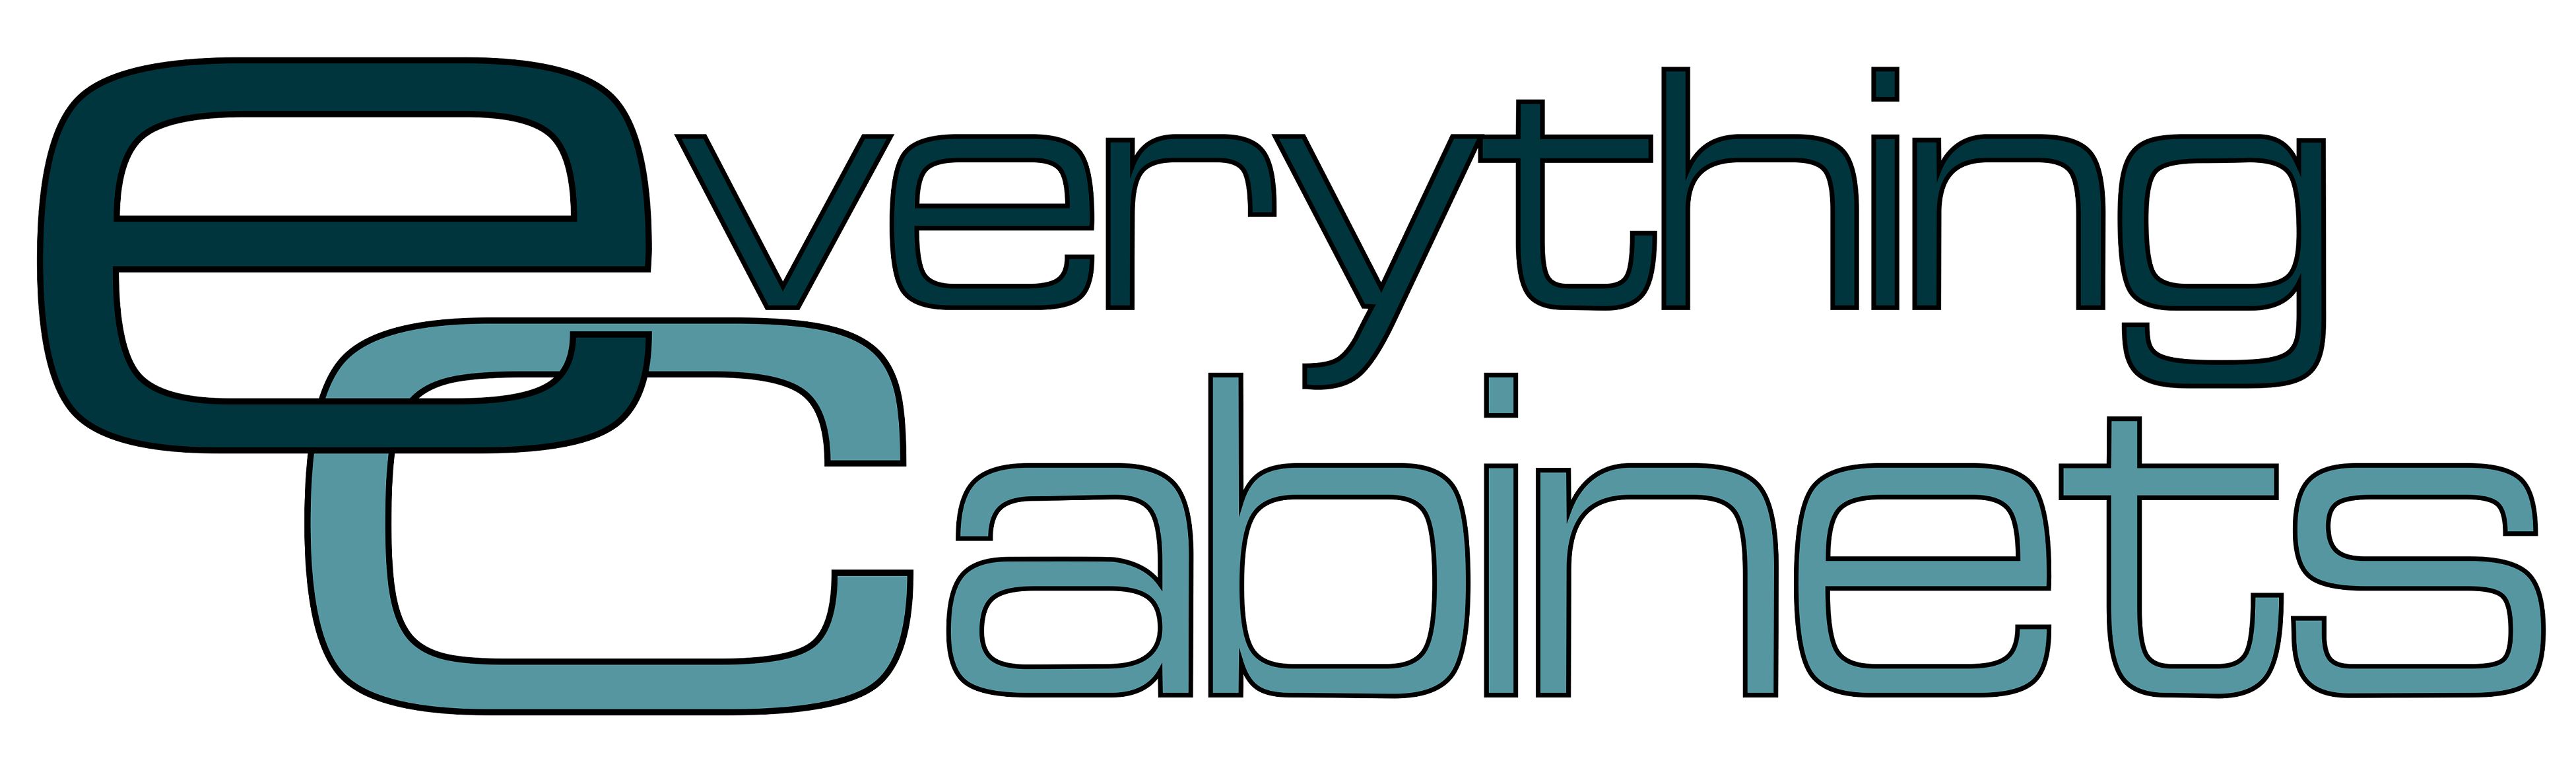 Everything Cabinets Logo